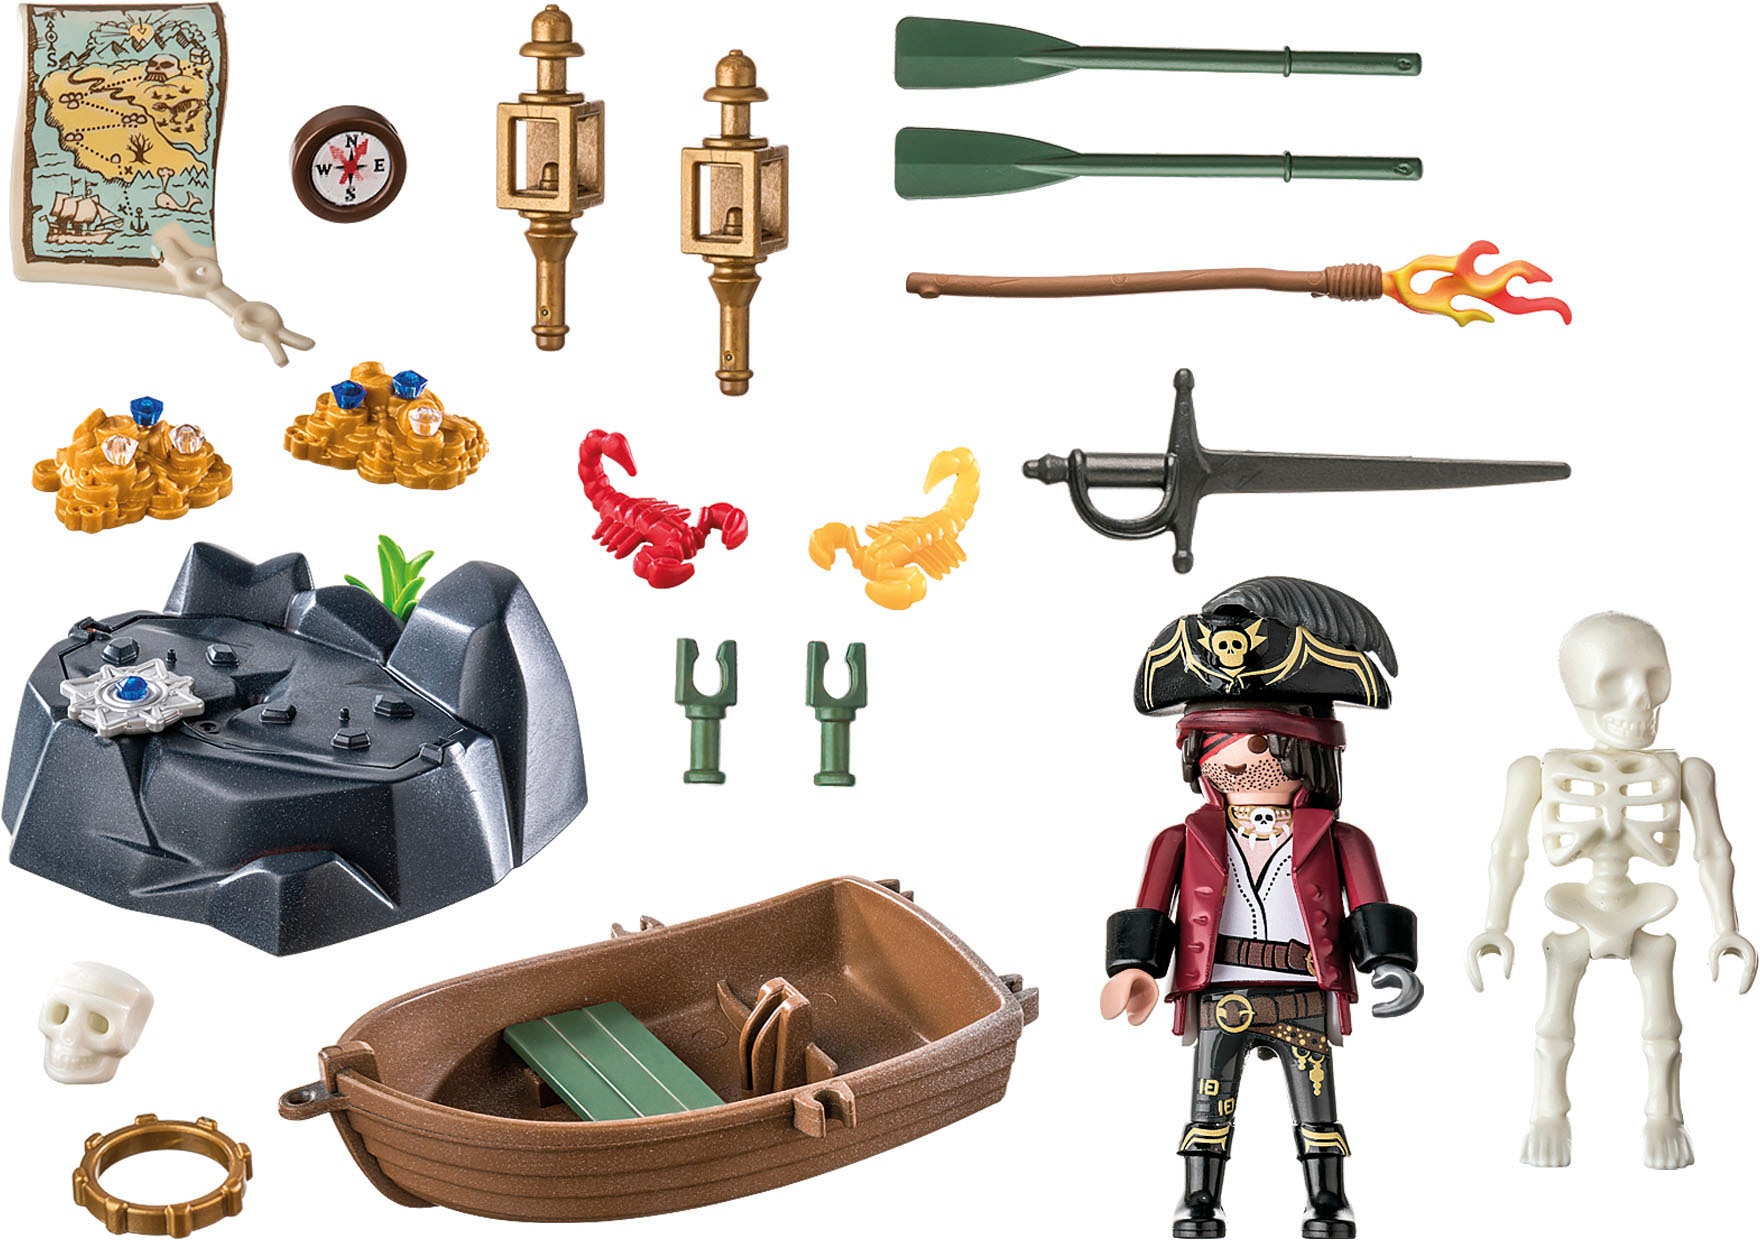 Playmobil® Konstruktions-Spielset »Starter Pack, Pirat mit Ruderboot (71254), Pirates«, (42 St.), Made in Europe